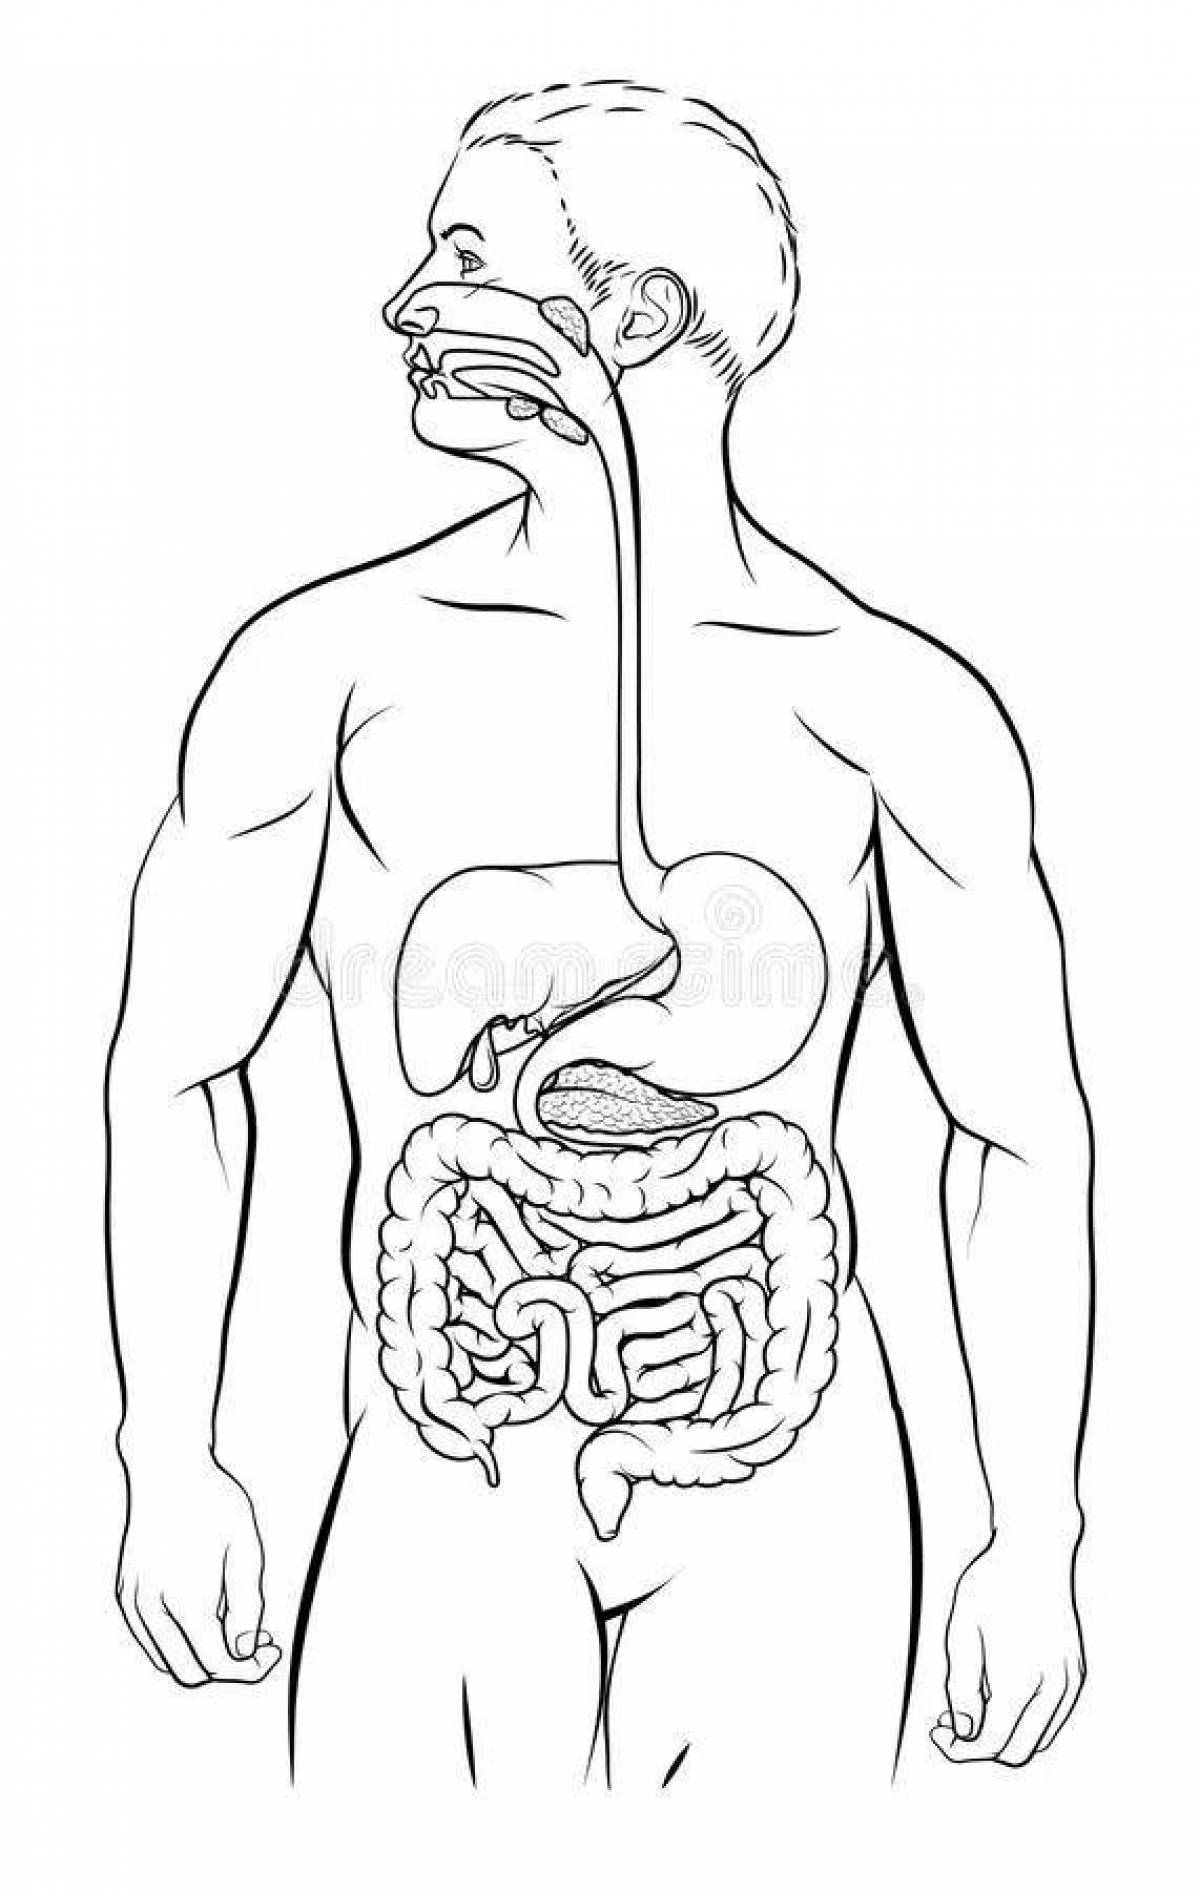 Human digestive system #22